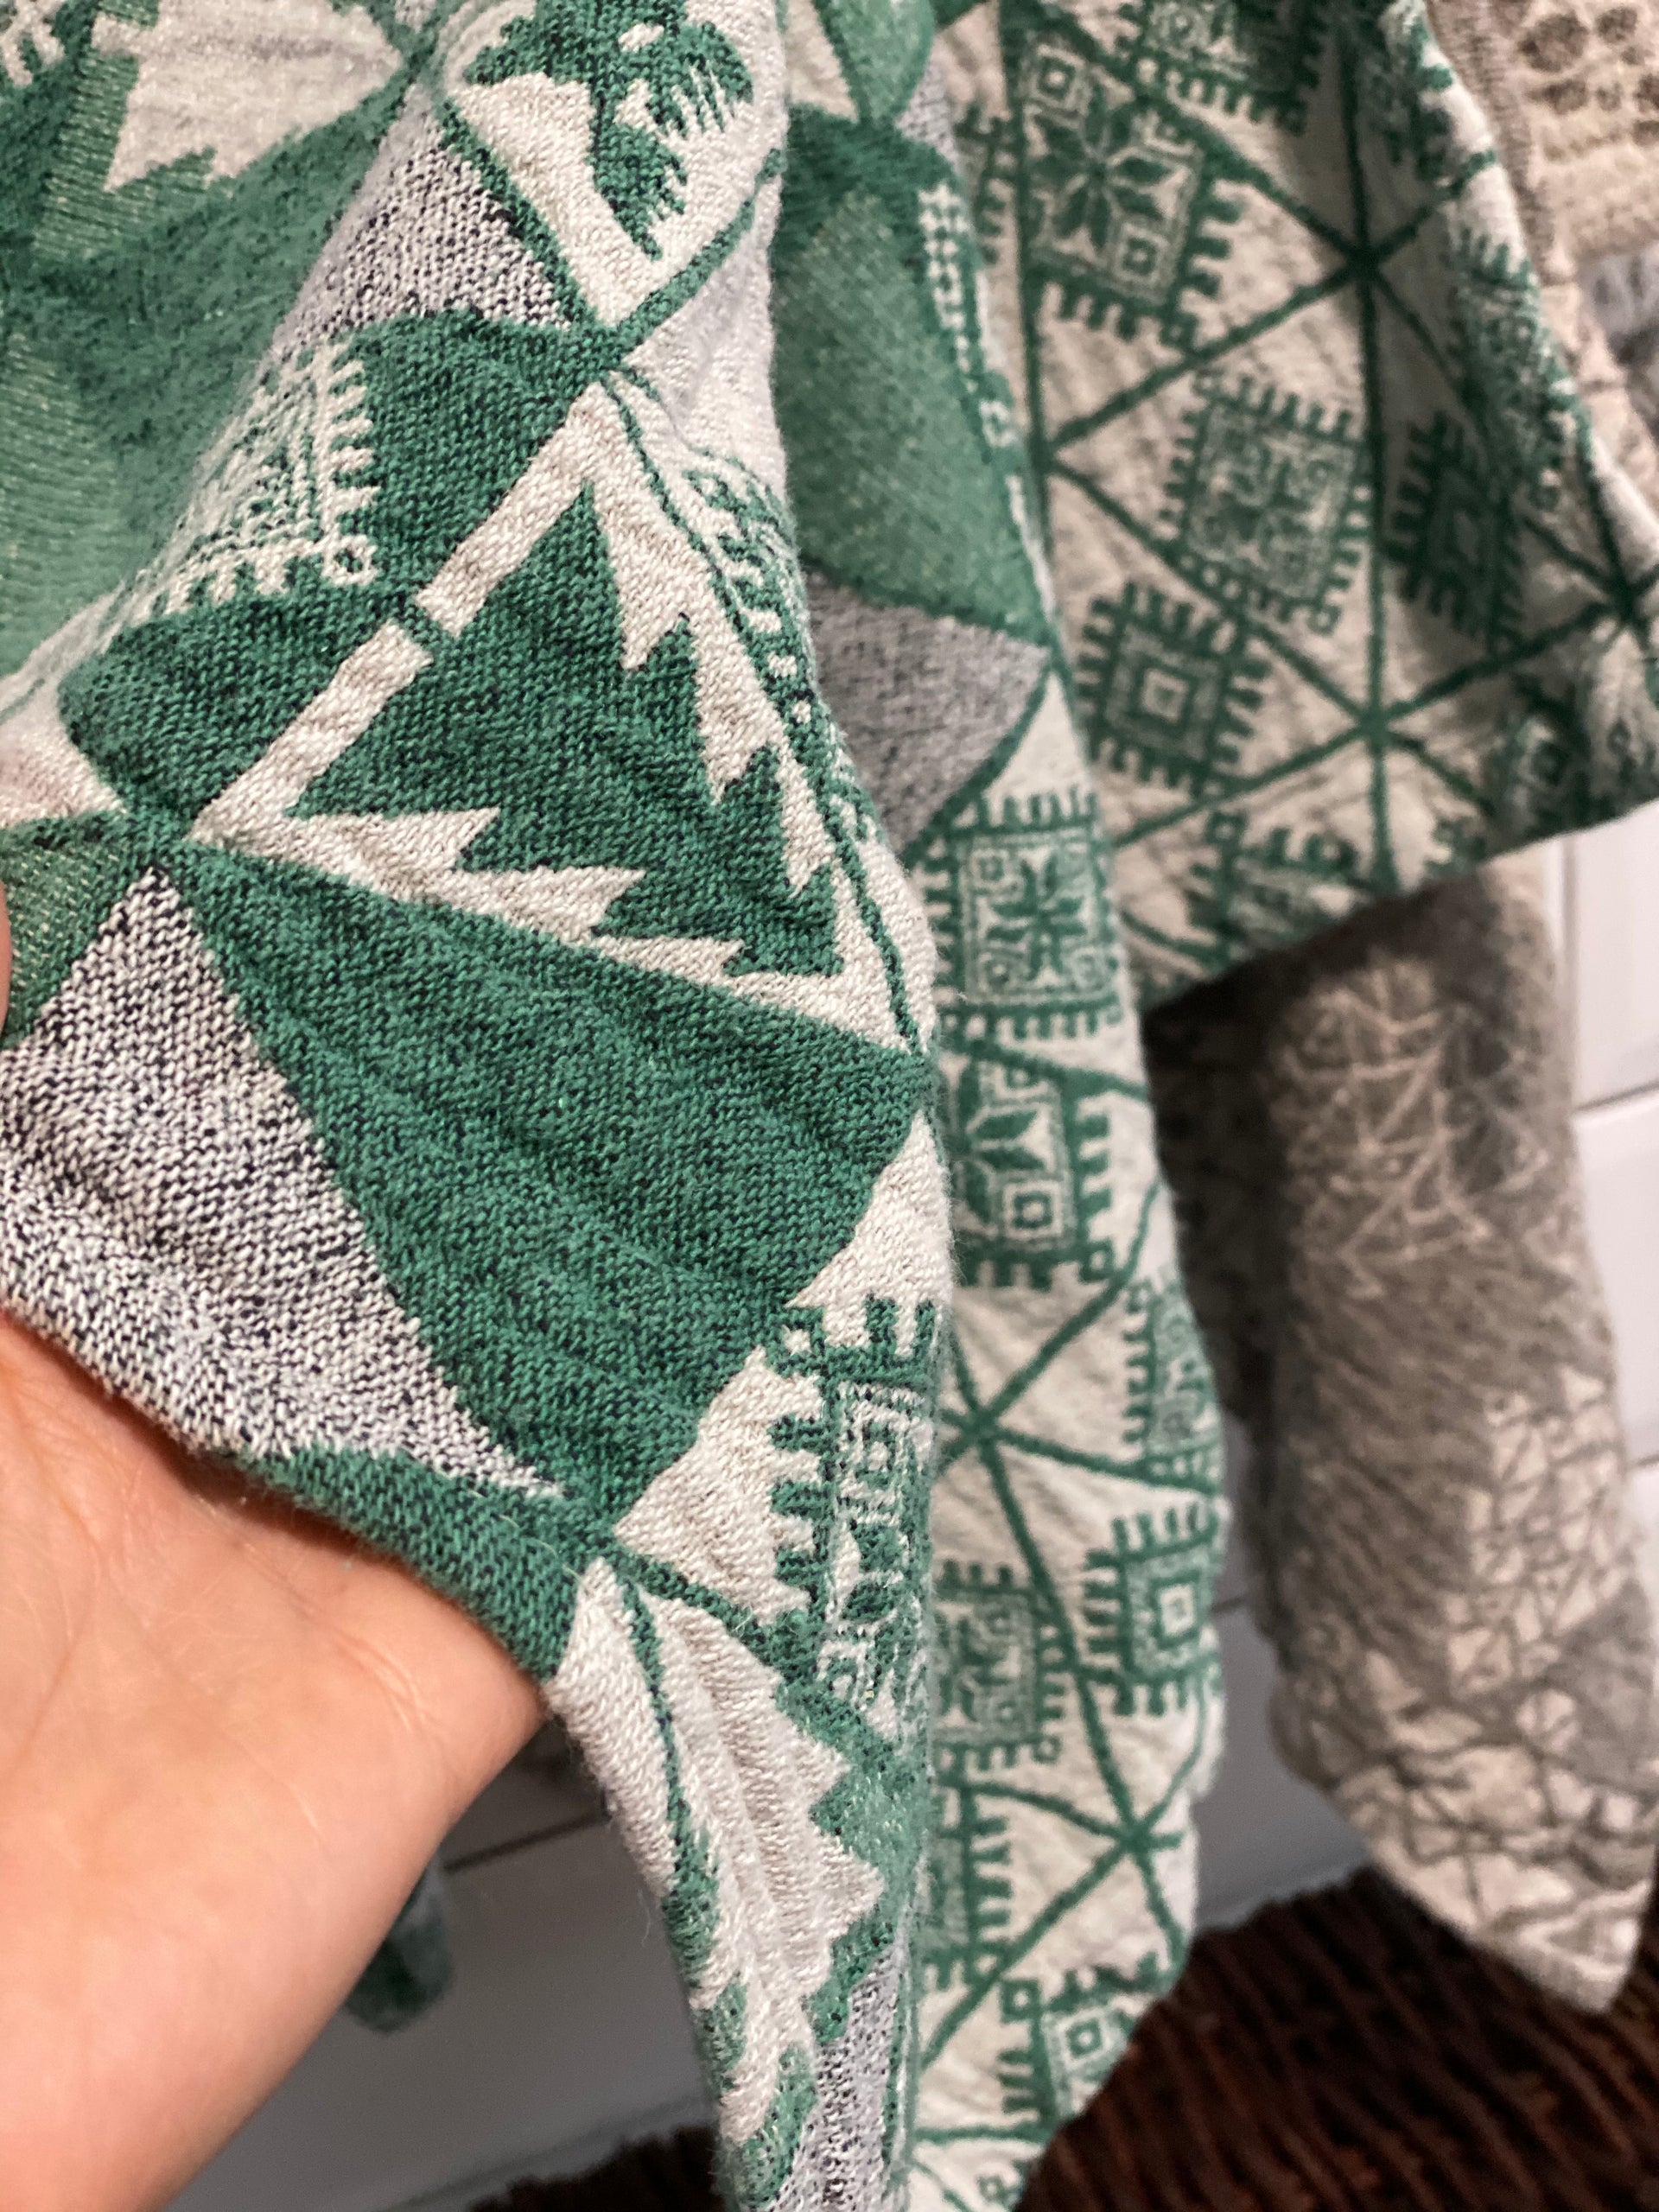 Green Bath Towel